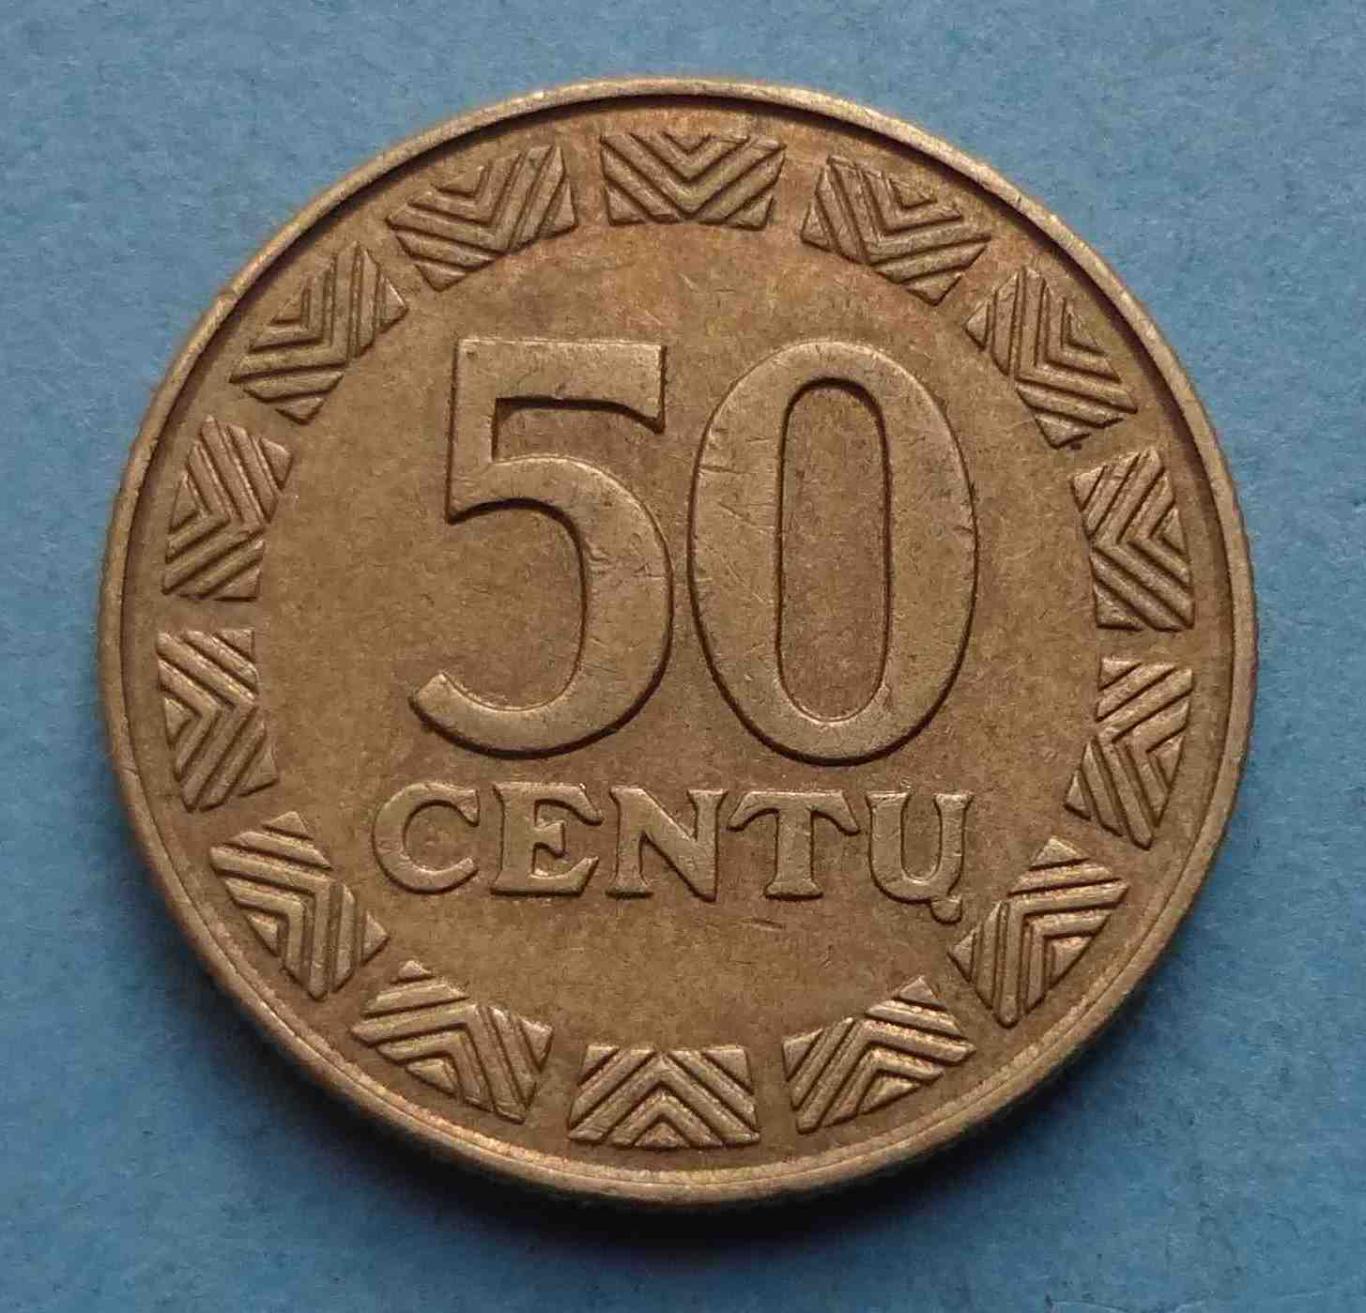 50 центов 1997 года Литва (39)